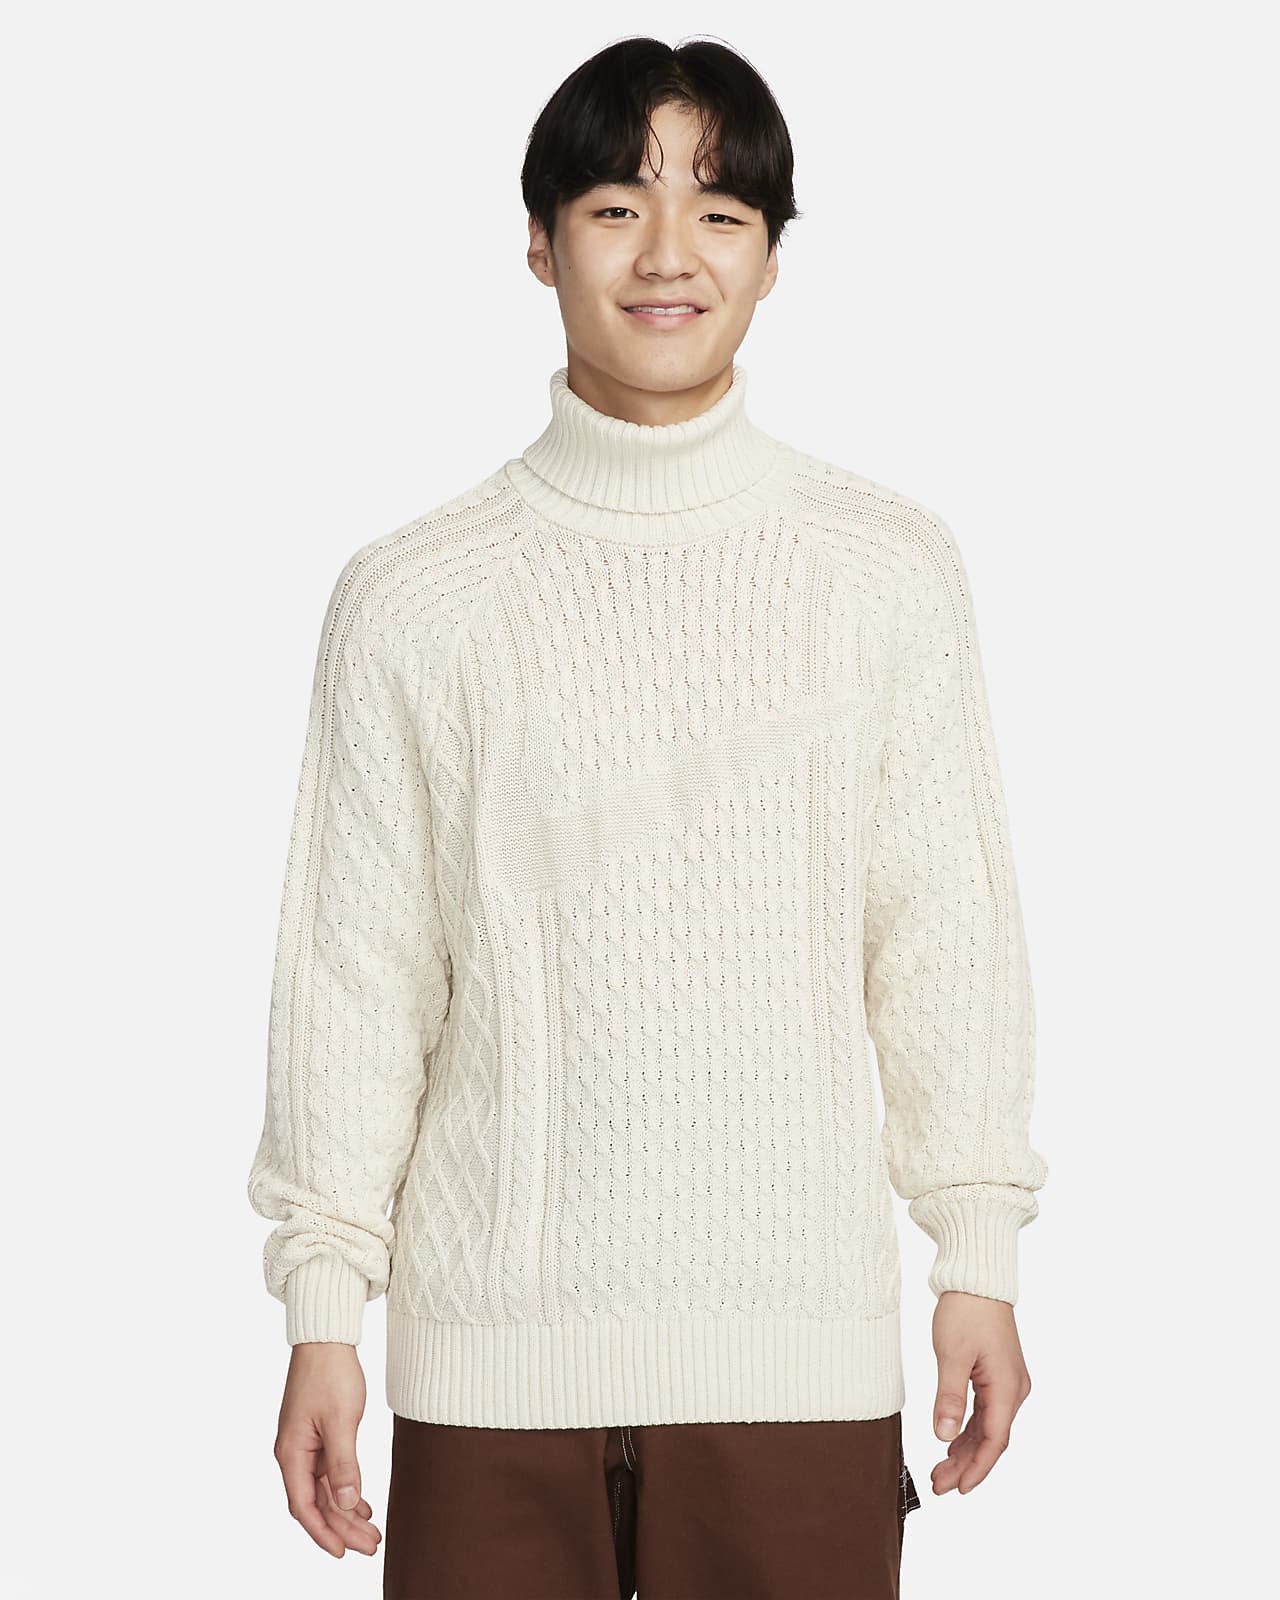 NIKE cable knit sweater ケーブルニット セーター S